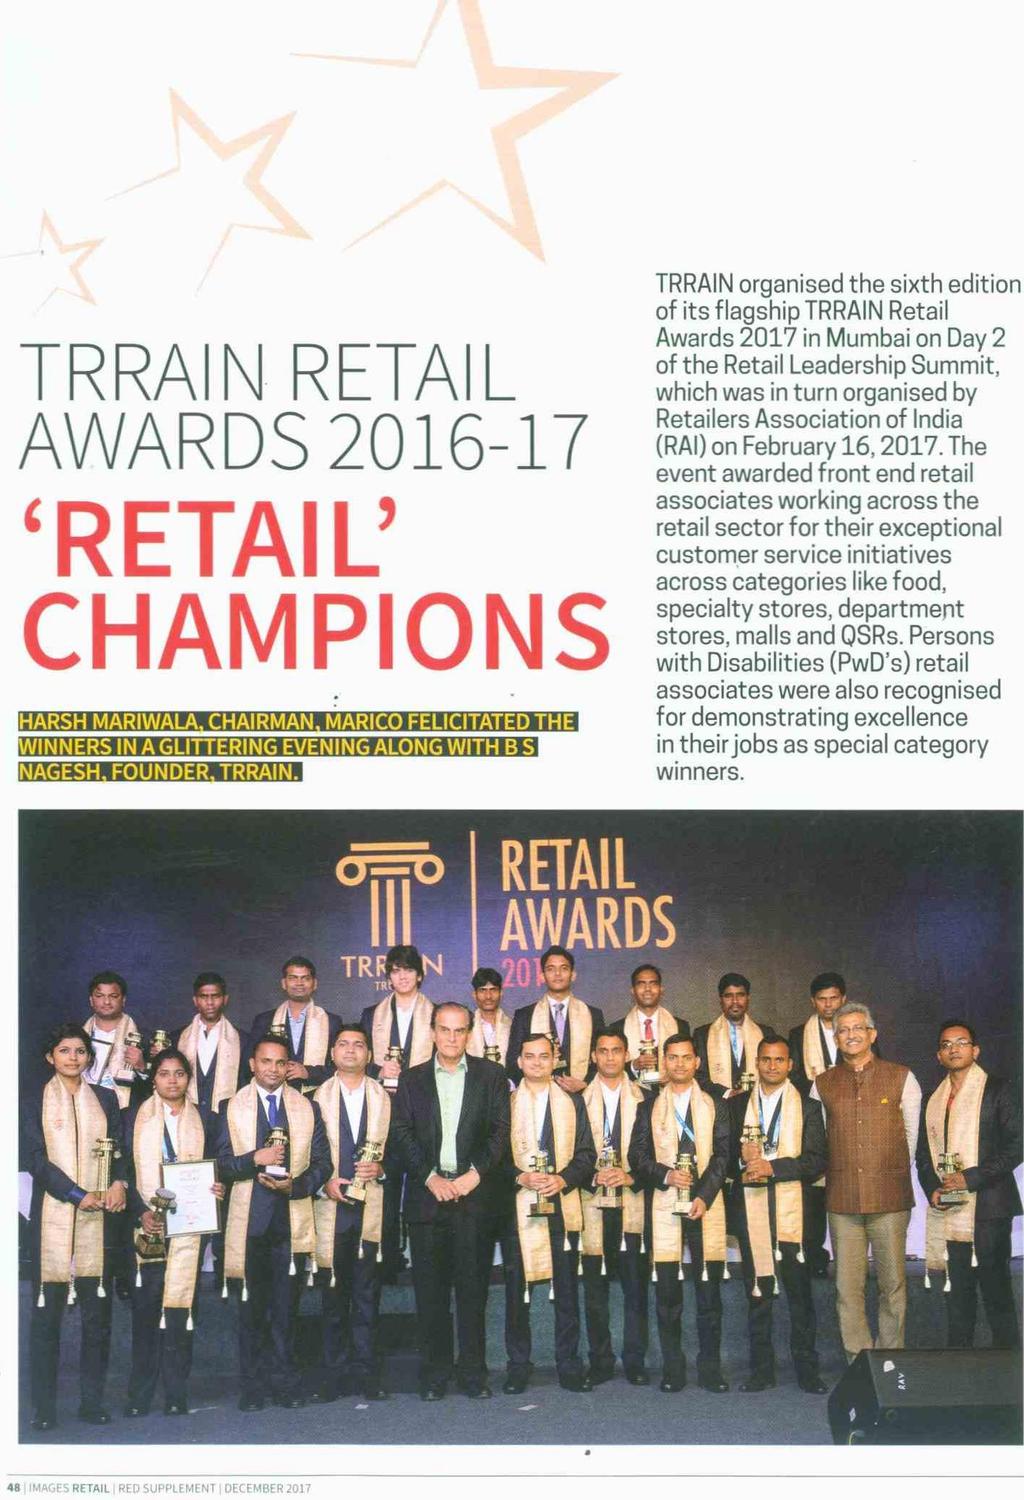 Title TRRAIN RETAIL AWARDS 2016-17 RETAIL CHAMPIONS